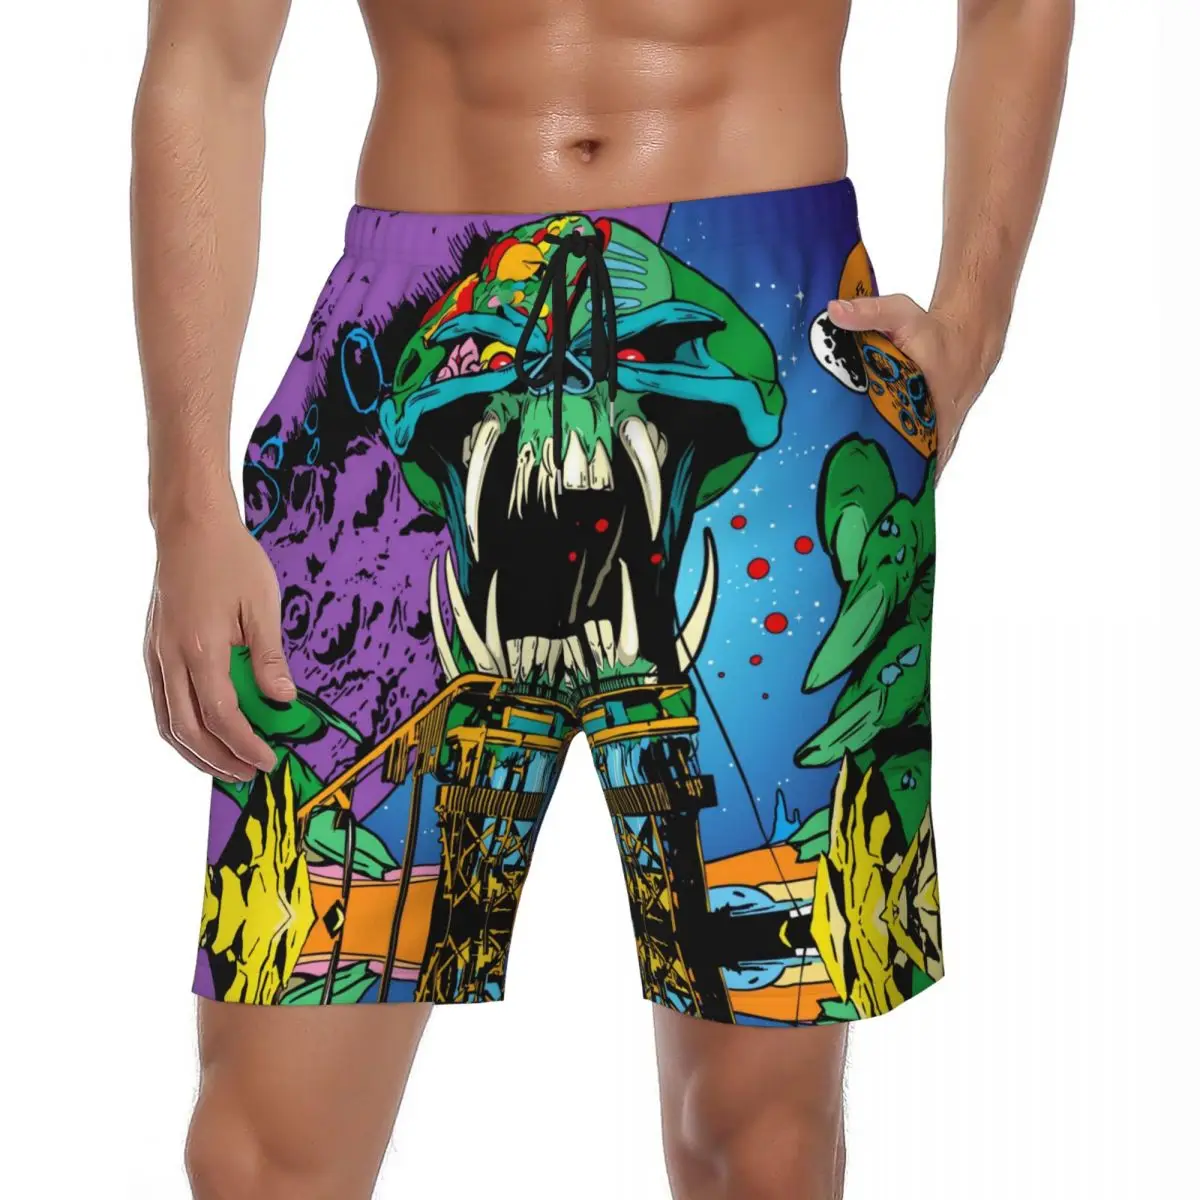 

Summer Gym Shorts Males New Pop 3D Print Gothic Surfing Horror Skull Beach Shorts Y2K Retro Quick Drying Swim Trunks Plus Size